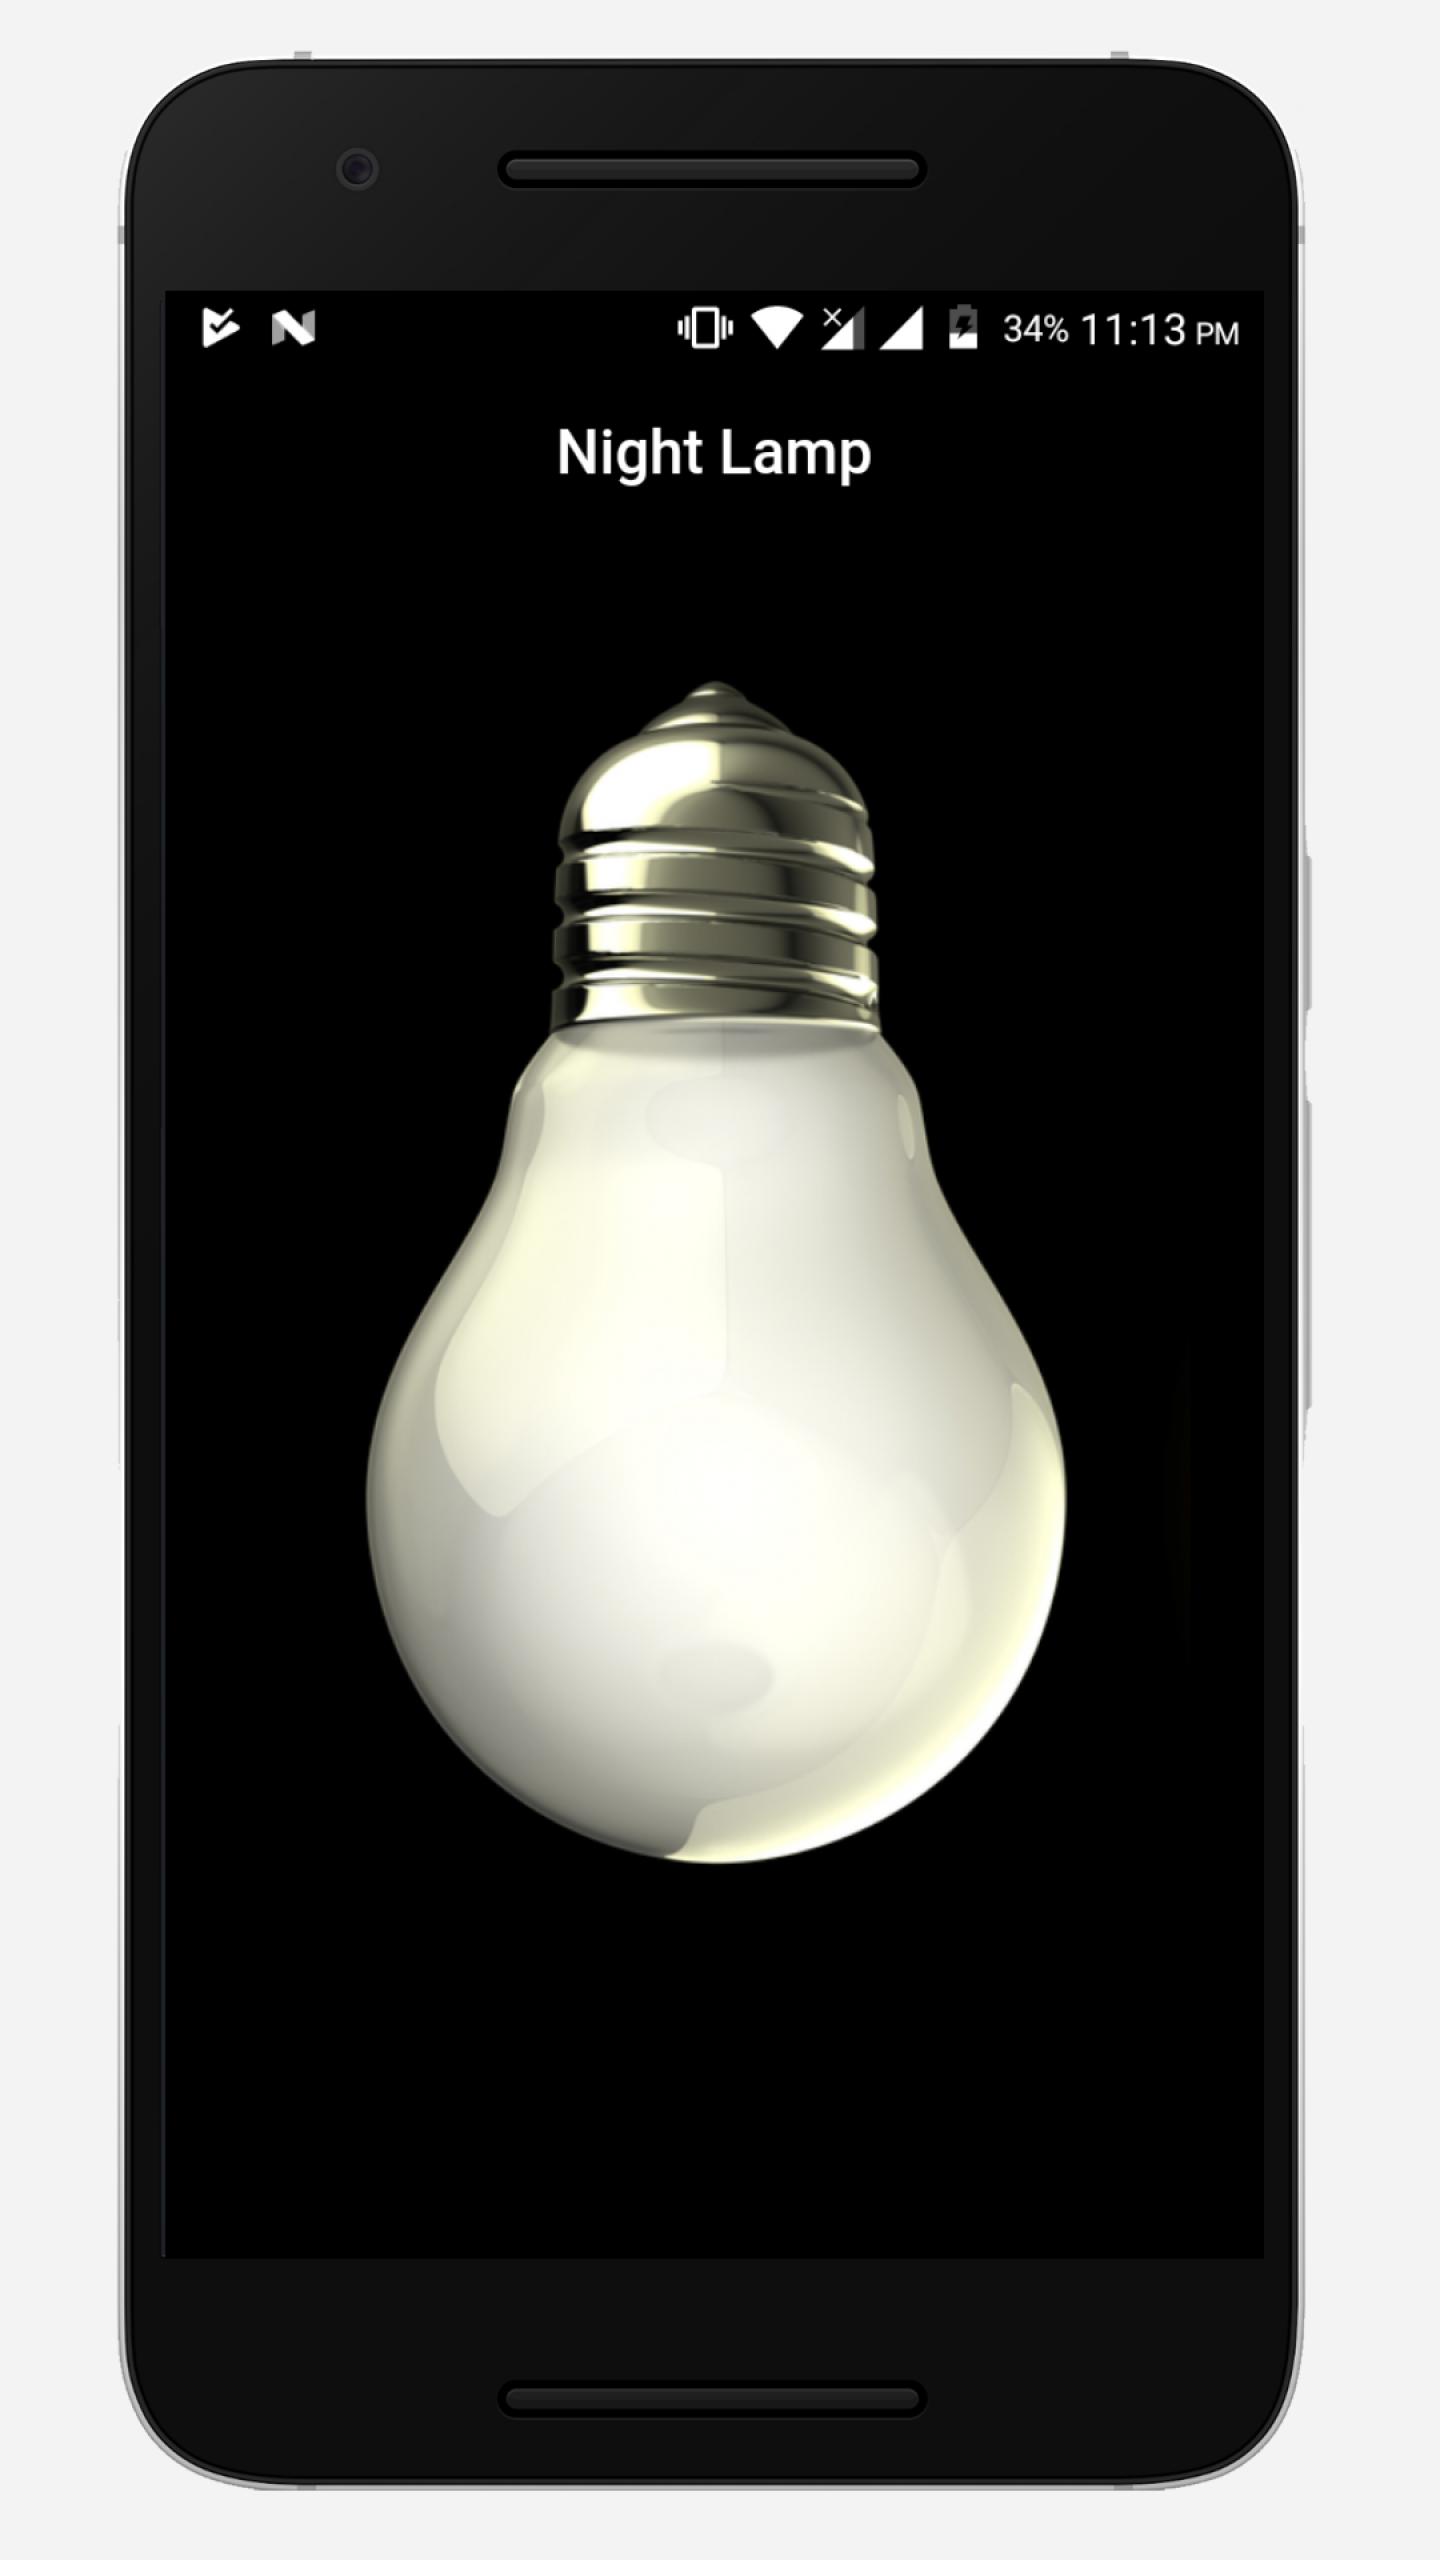 Lampa apk 4pda android. Приложение лампа для андроид. Night Lamp. Лампа для андроид 4pda. I-at Lamp Android.